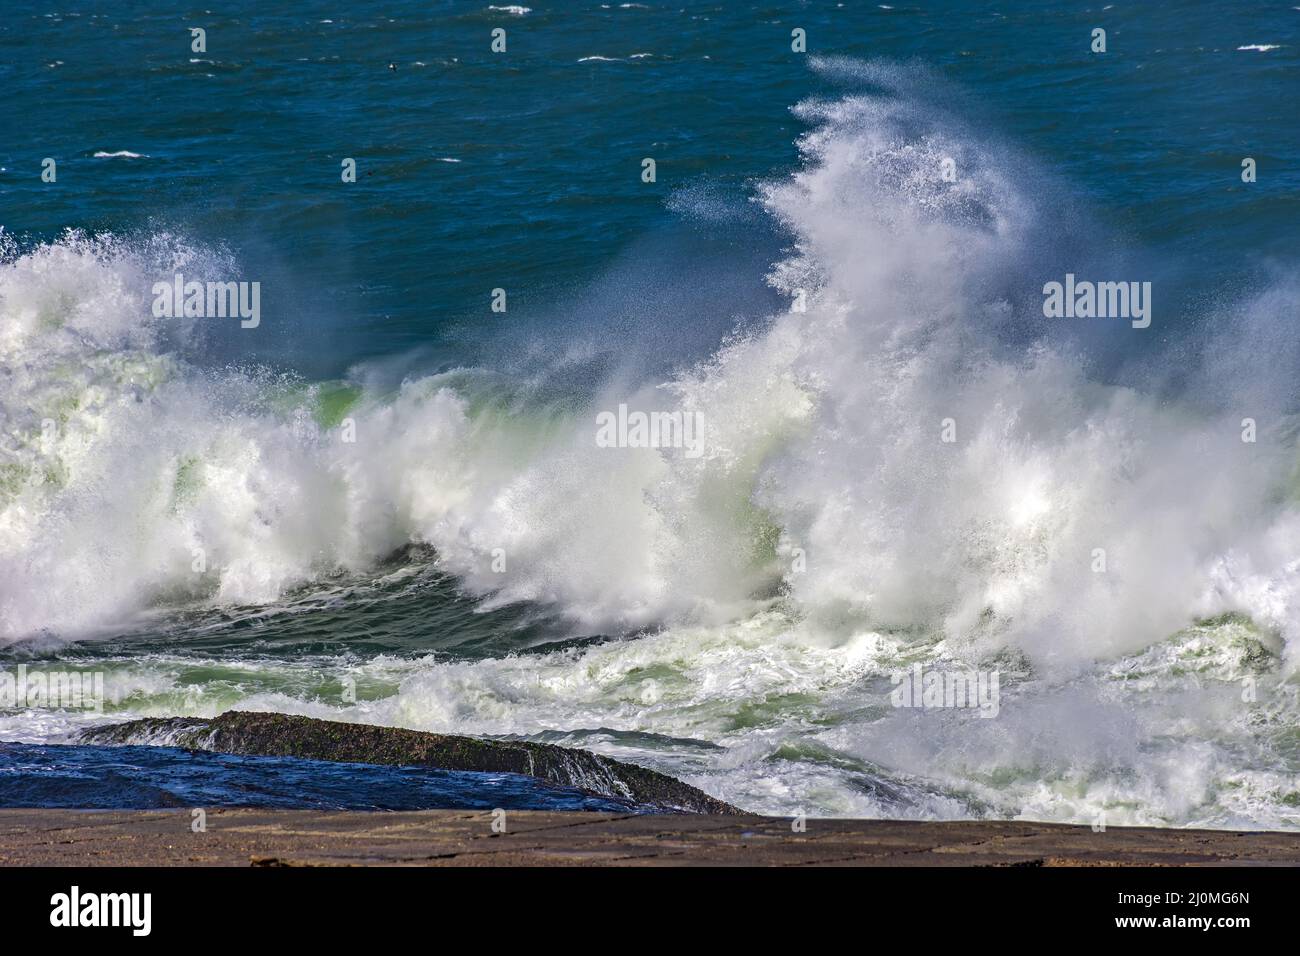 Strong waves crashing against rocks Stock Photo